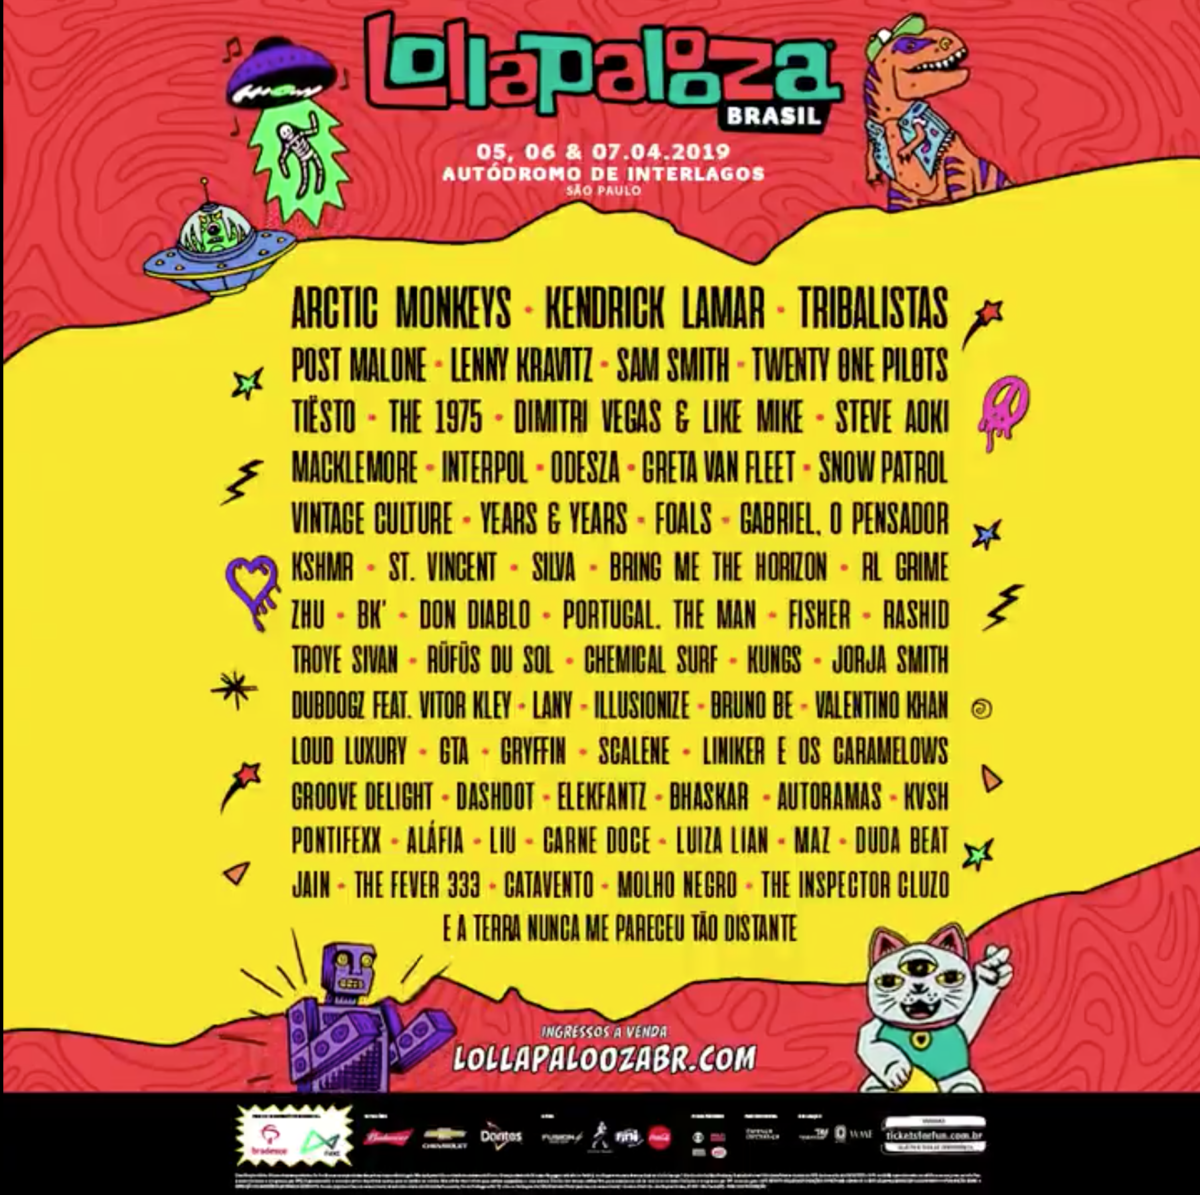 Lollapalooza line up